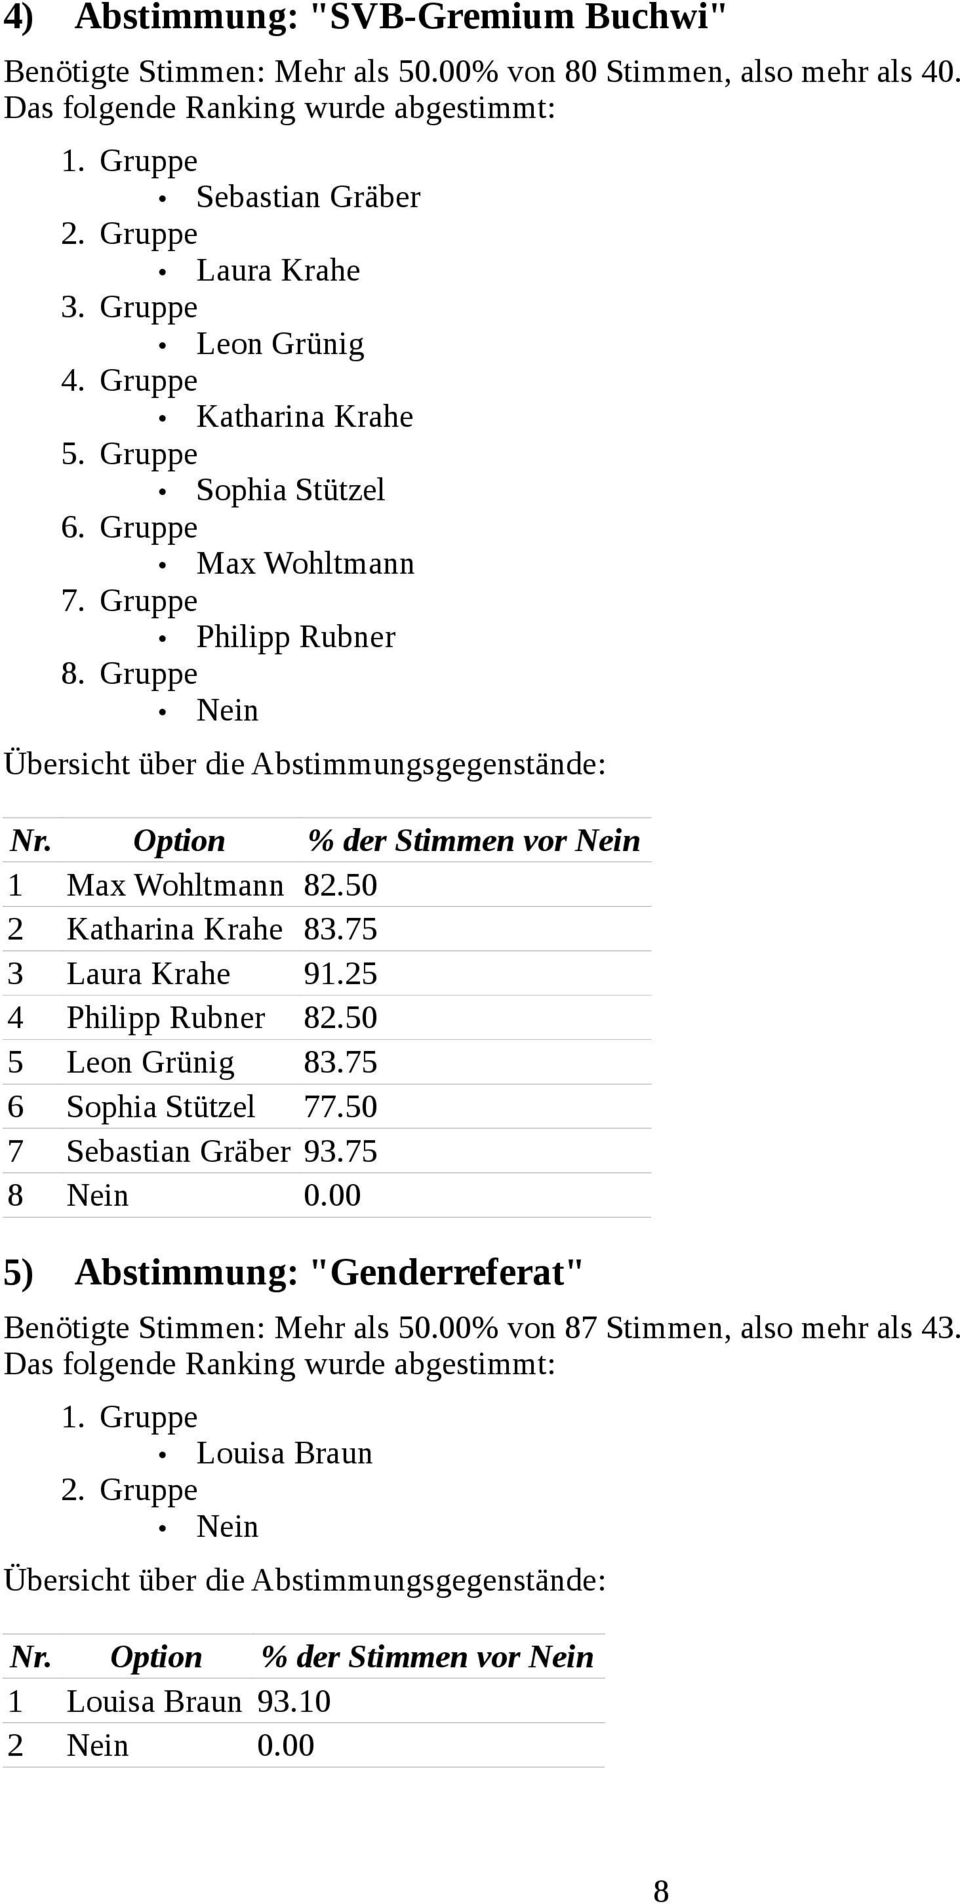 Option % der Stimmen vor Nein 1 Max Wohltmann 82.50 2 Katharina Krahe 83.75 3 Laura Krahe 91.25 4 Philipp Rubner 82.50 5 Leon Grünig 83.75 6 Sophia Stützel 77.50 7 Sebastian Gräber 93.75 8 Nein 0.